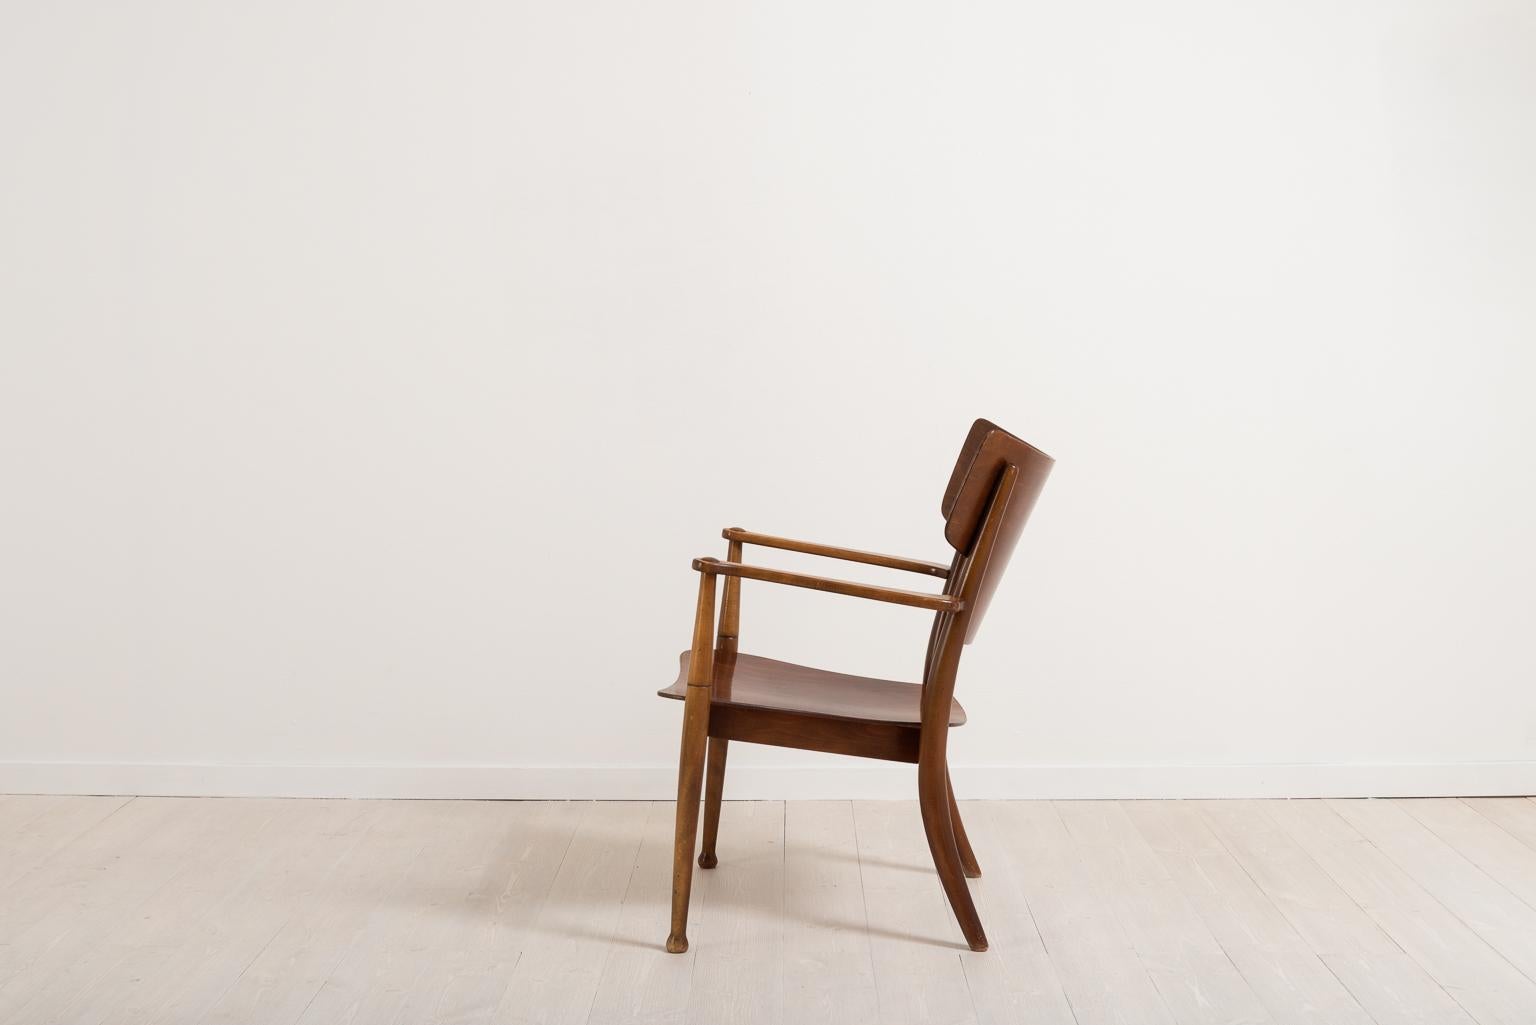 Swedish Chair 'Portex' Designed 1944 by Peter Hvidt and Orla Molgaard-Nielsen